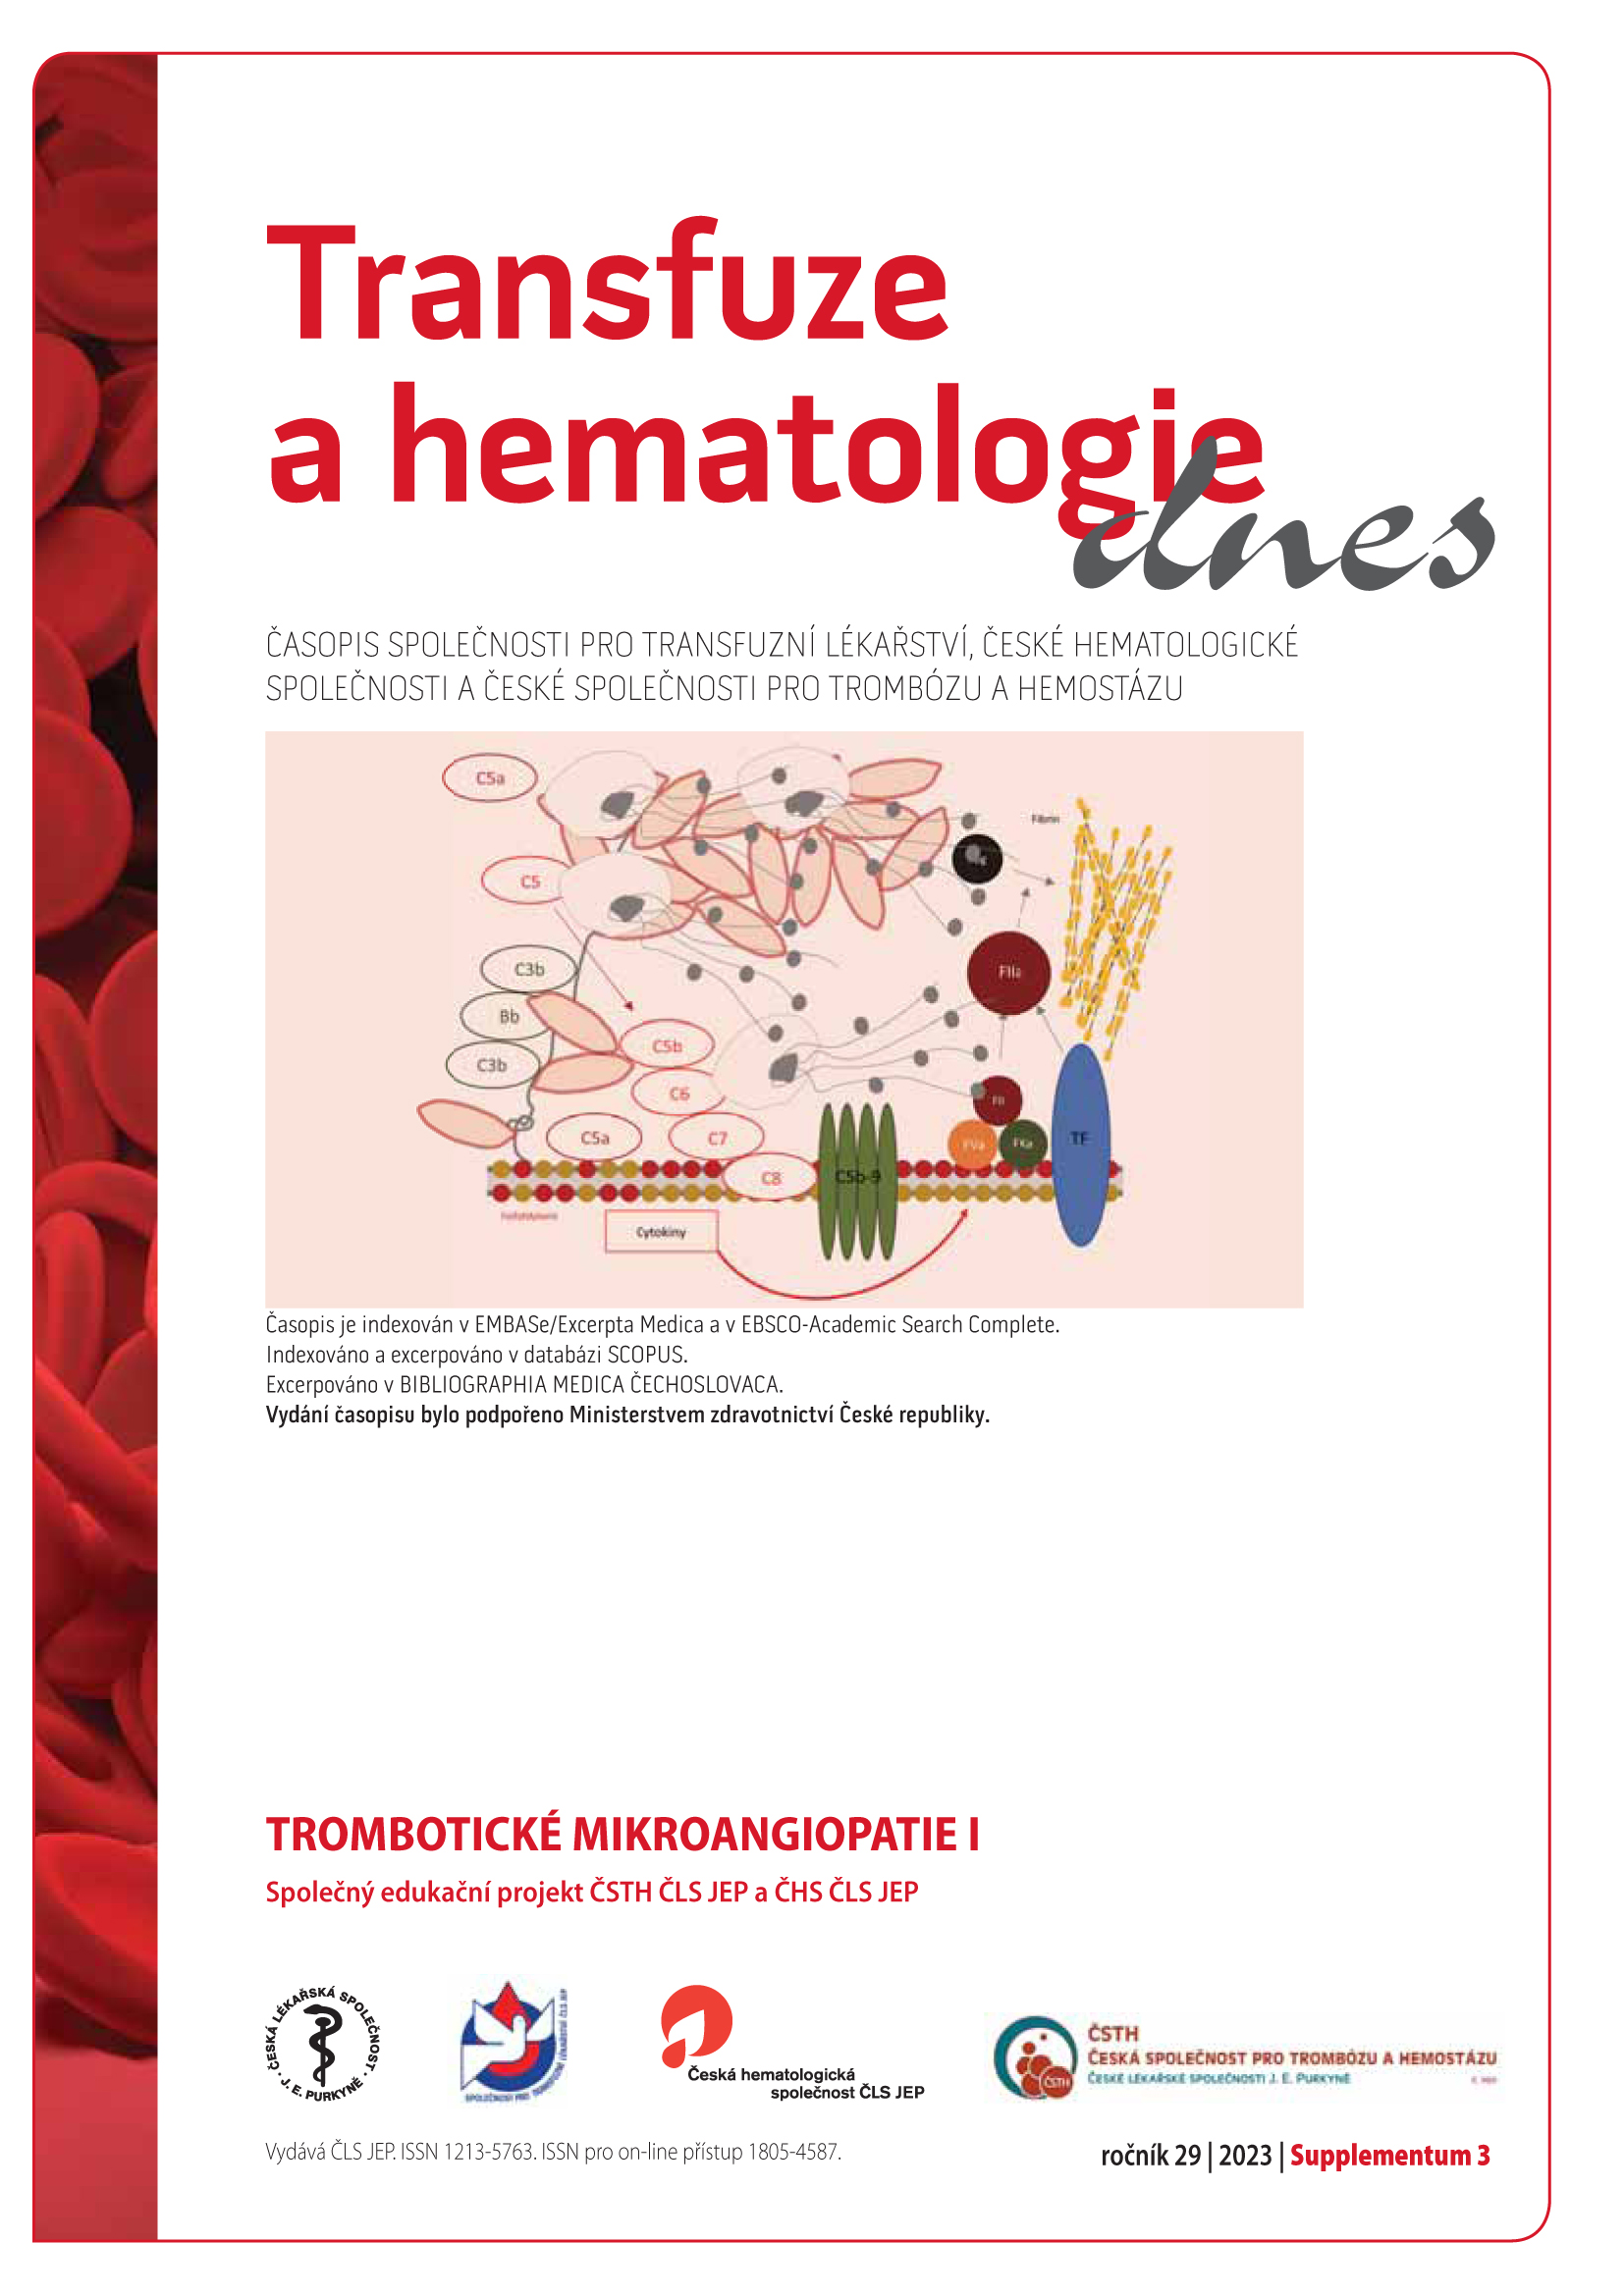 					Náhled Vol 29 No supplementum 3 (2023): Transfuze a hematologie dnes
				